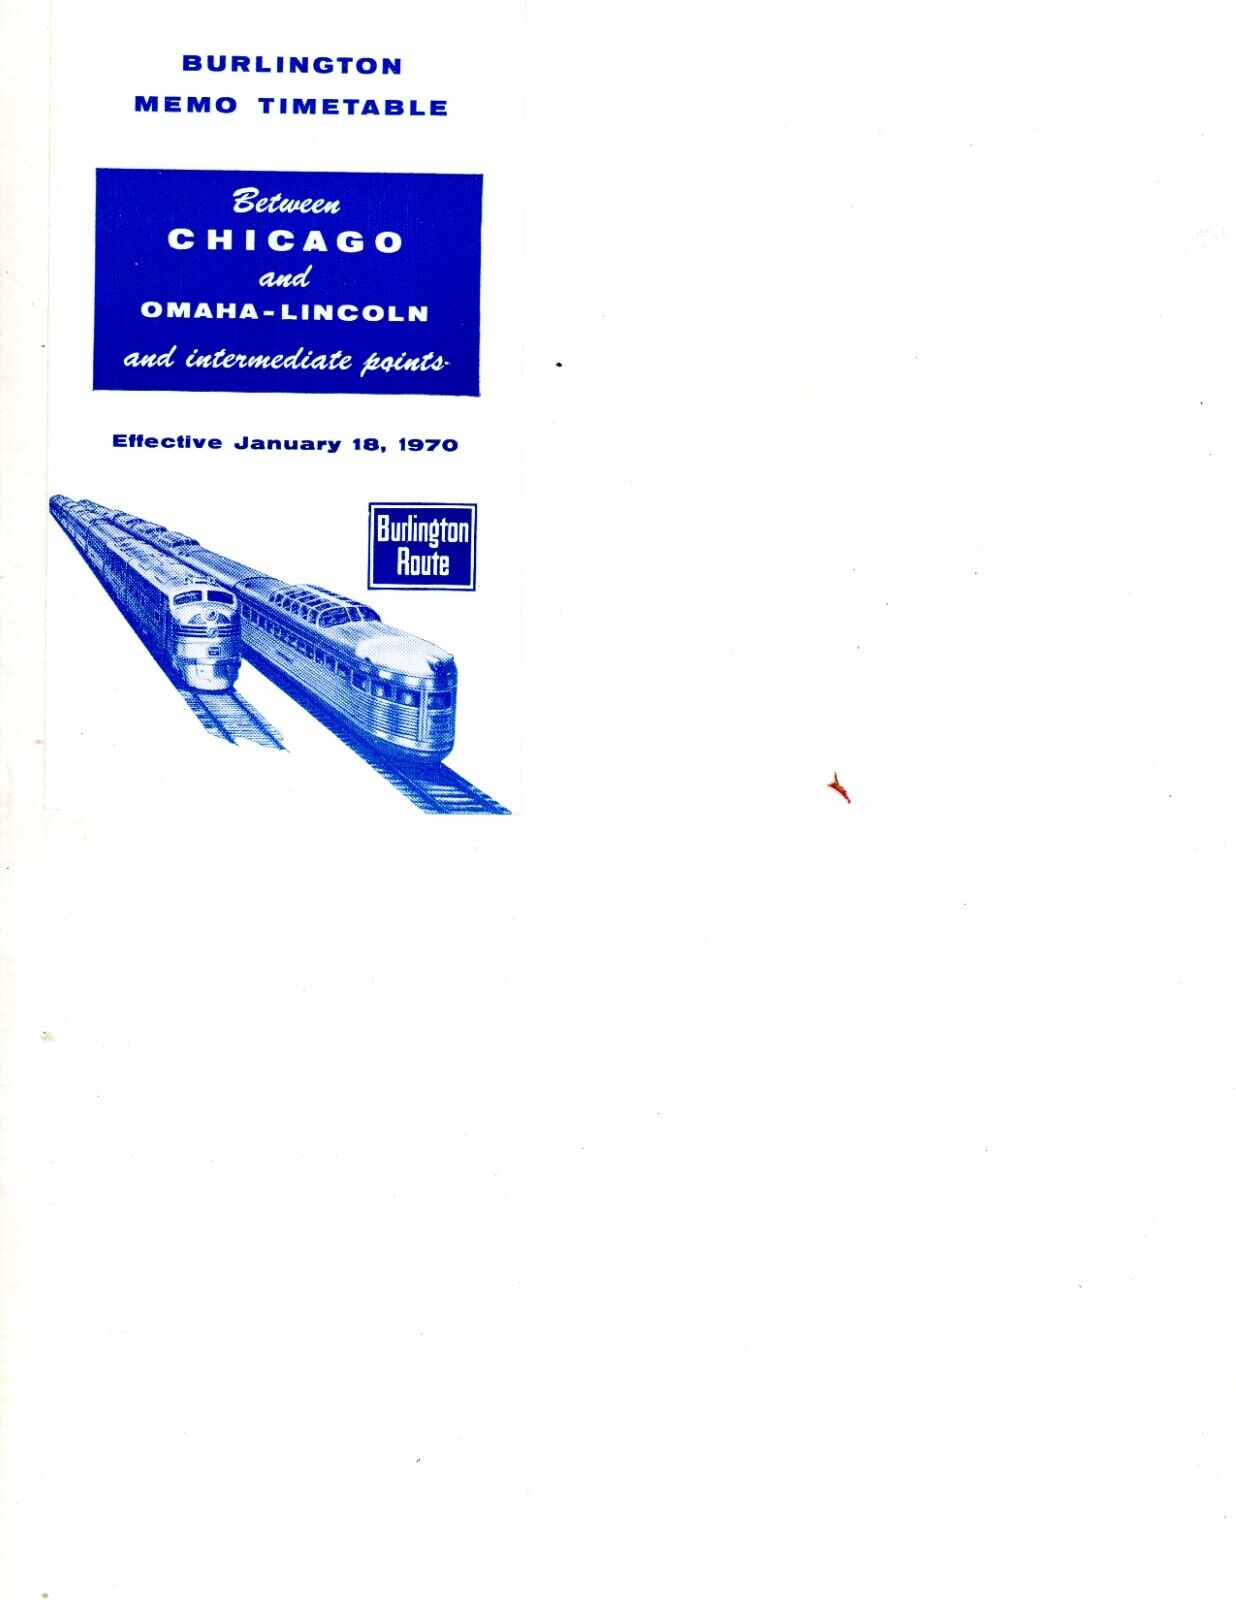 CHICAGO, BURLINGTON & QUINCY RR - CHICAGO TO OMAHA/LINCOLN TT - 1/18/1970